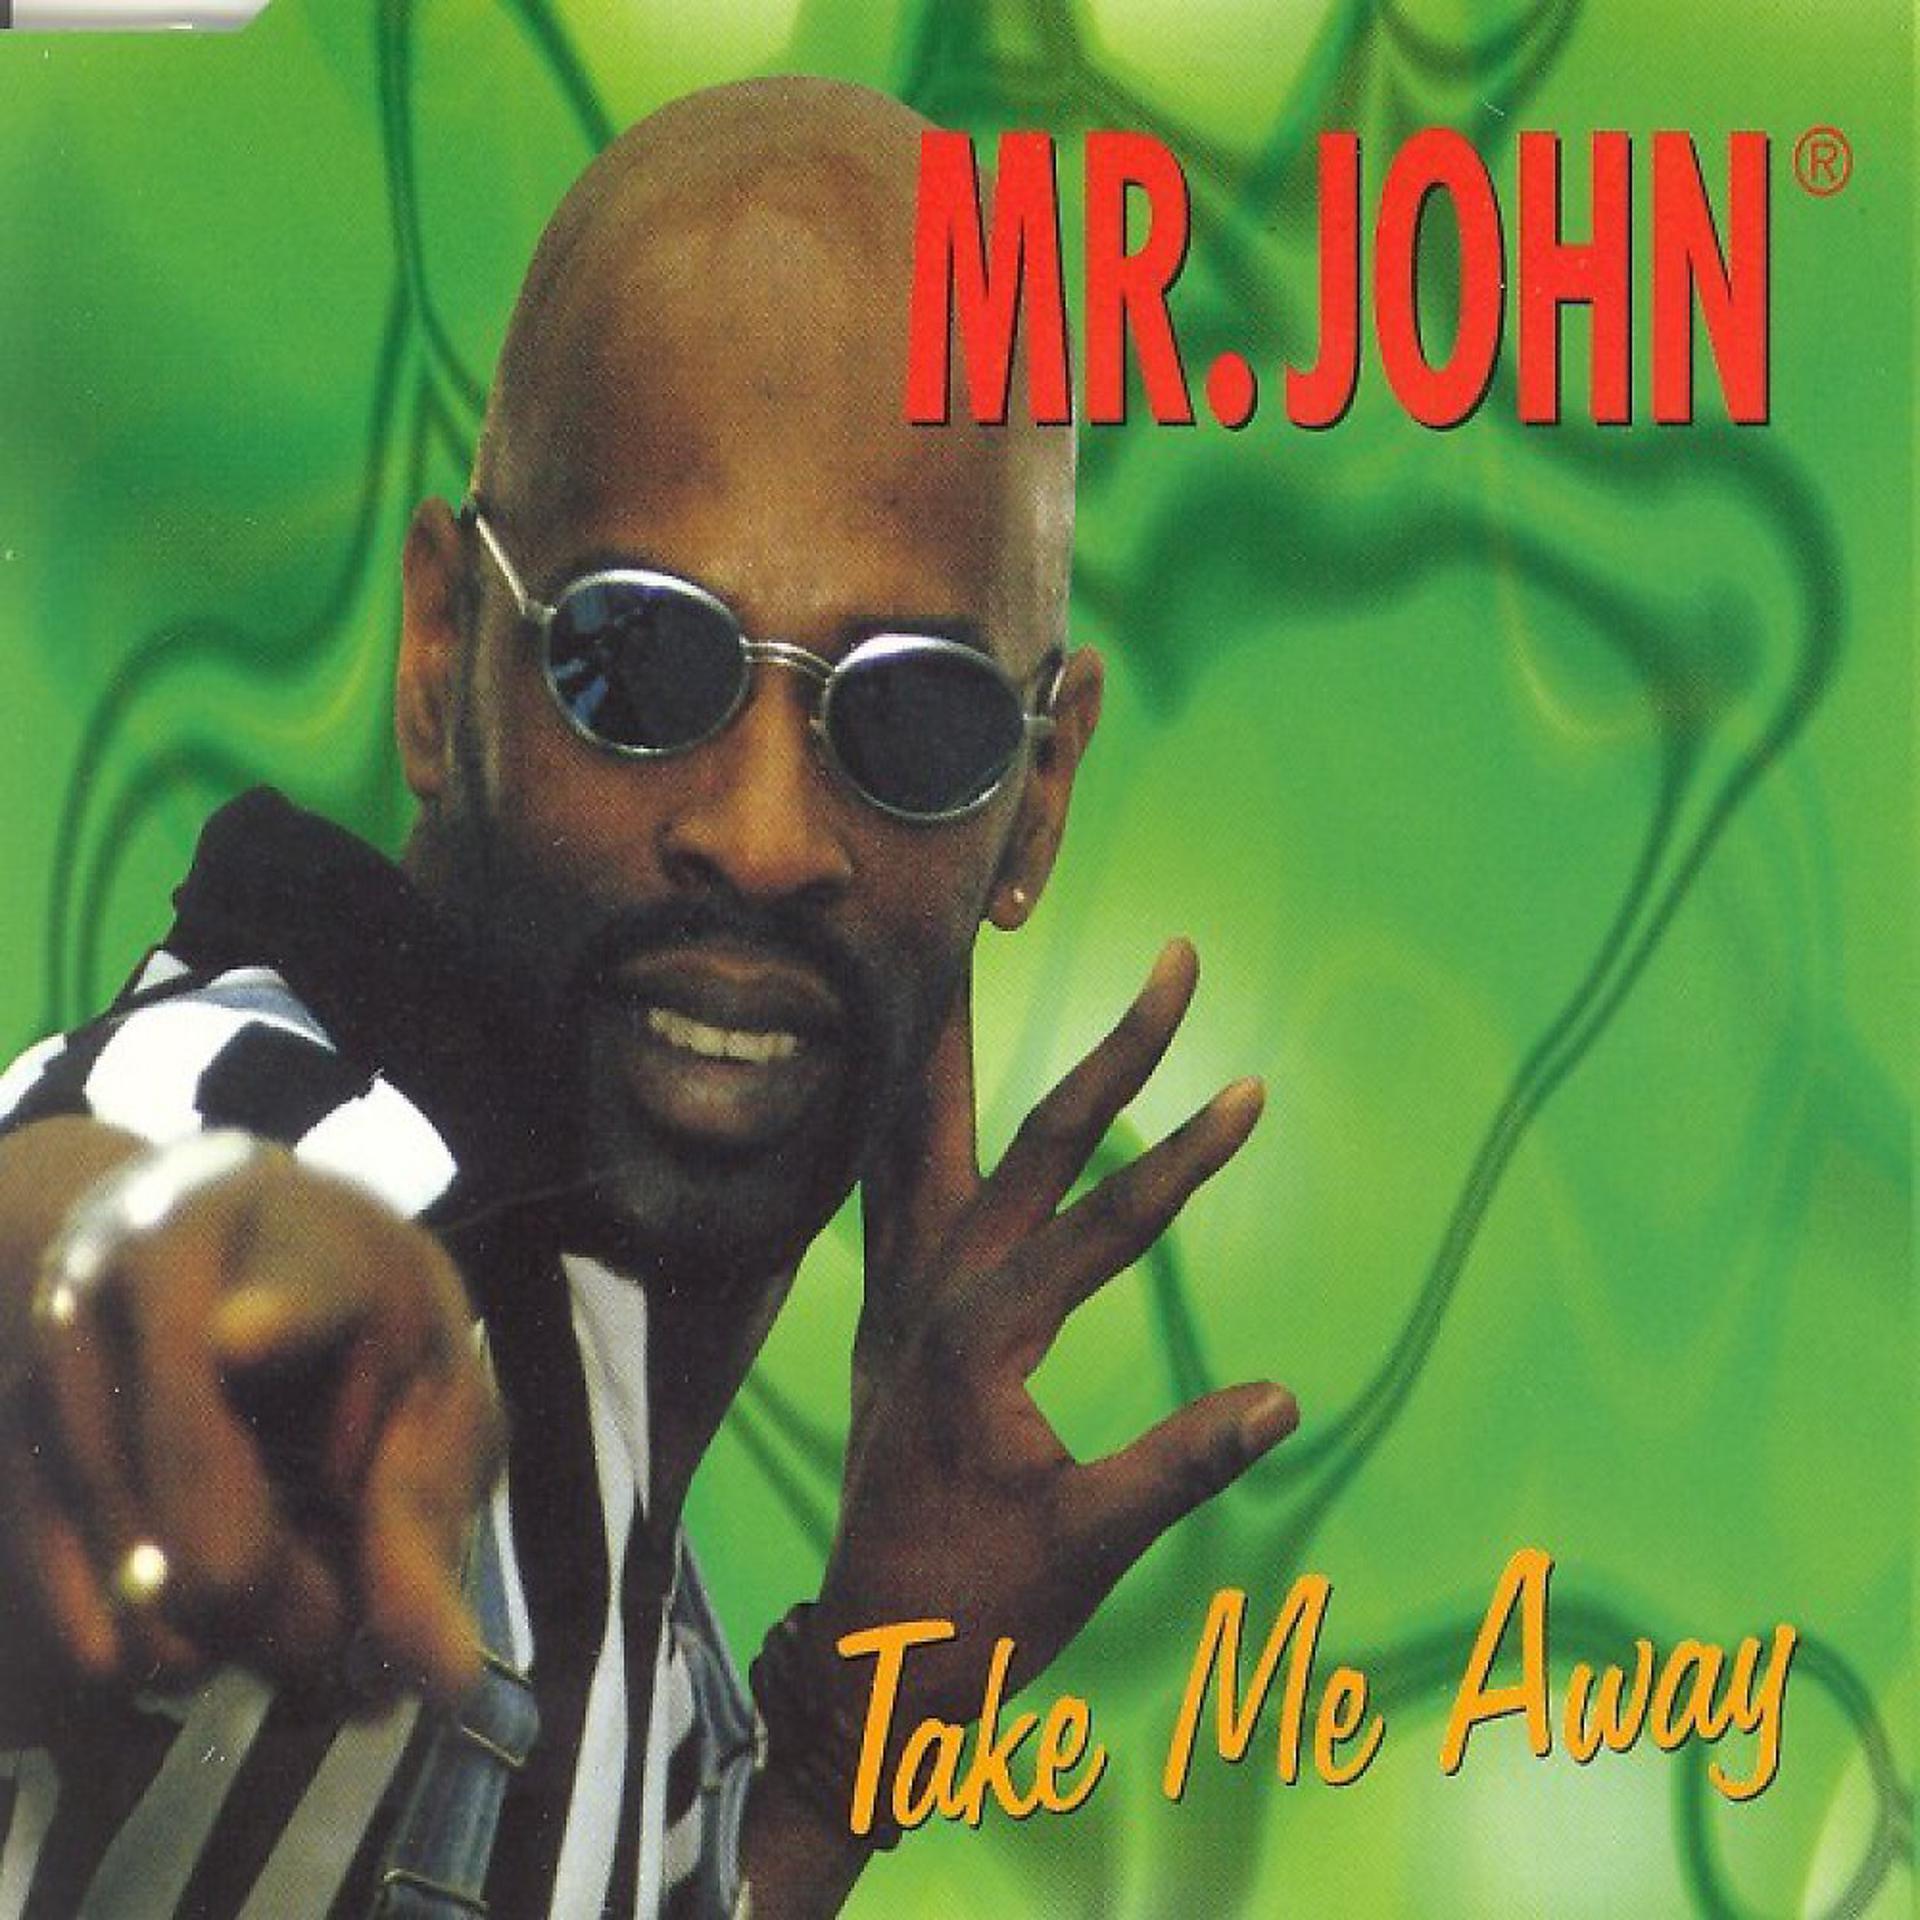 Ticking away. Mr John. Mr. John - альбом. Mr John мр3. Mr. John - get it on фото.